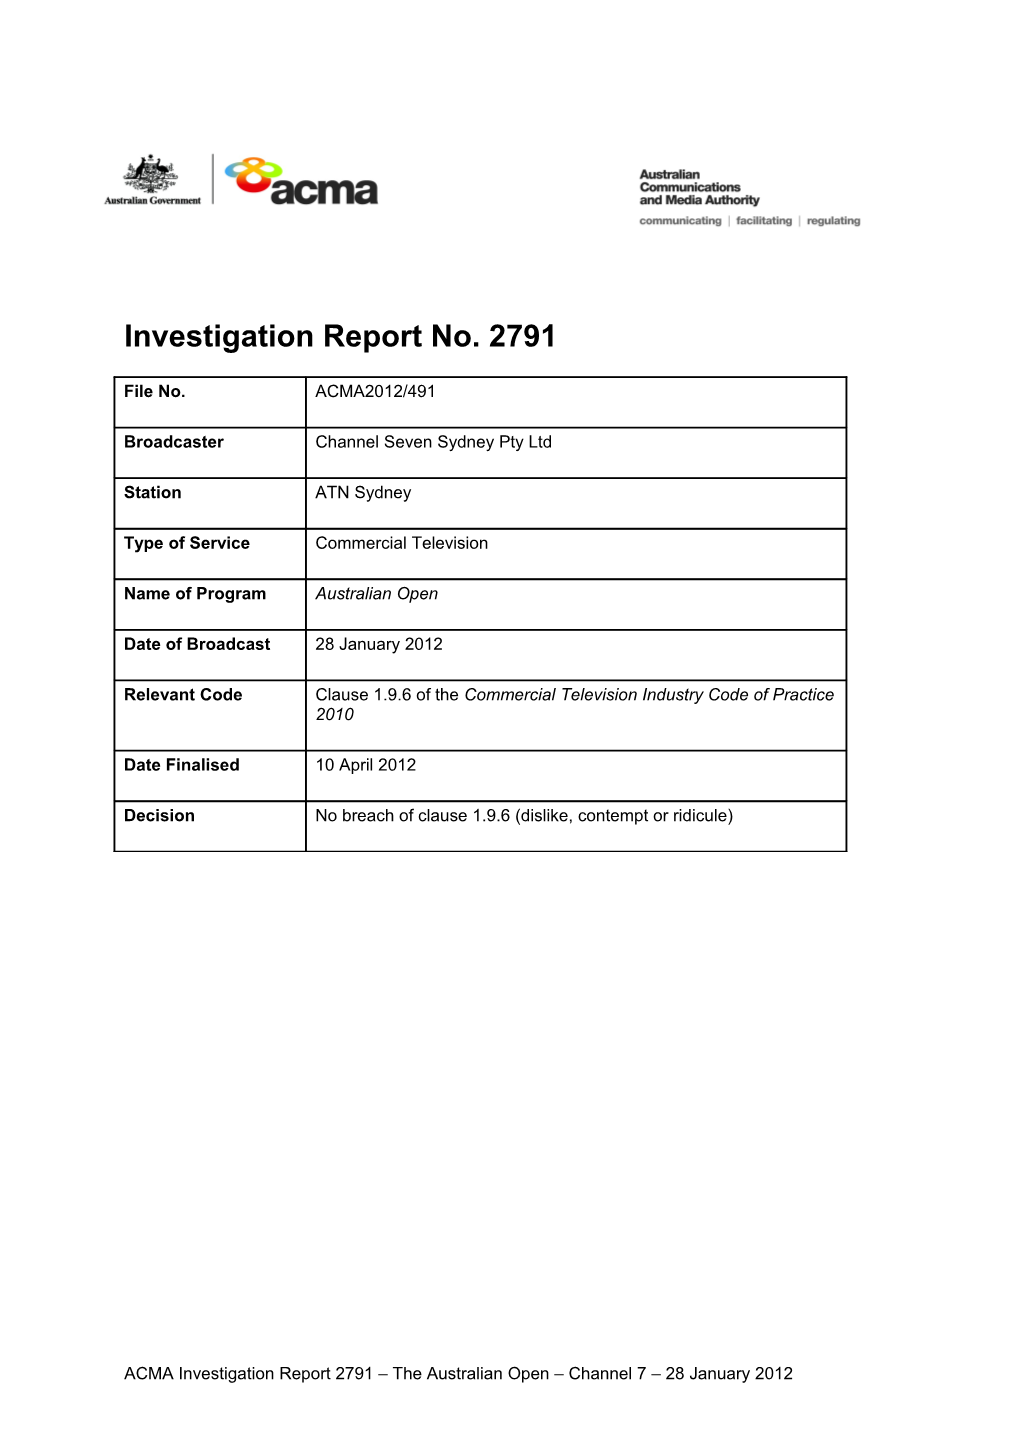 ATN Sydney - ACMA Investigation Report 2791